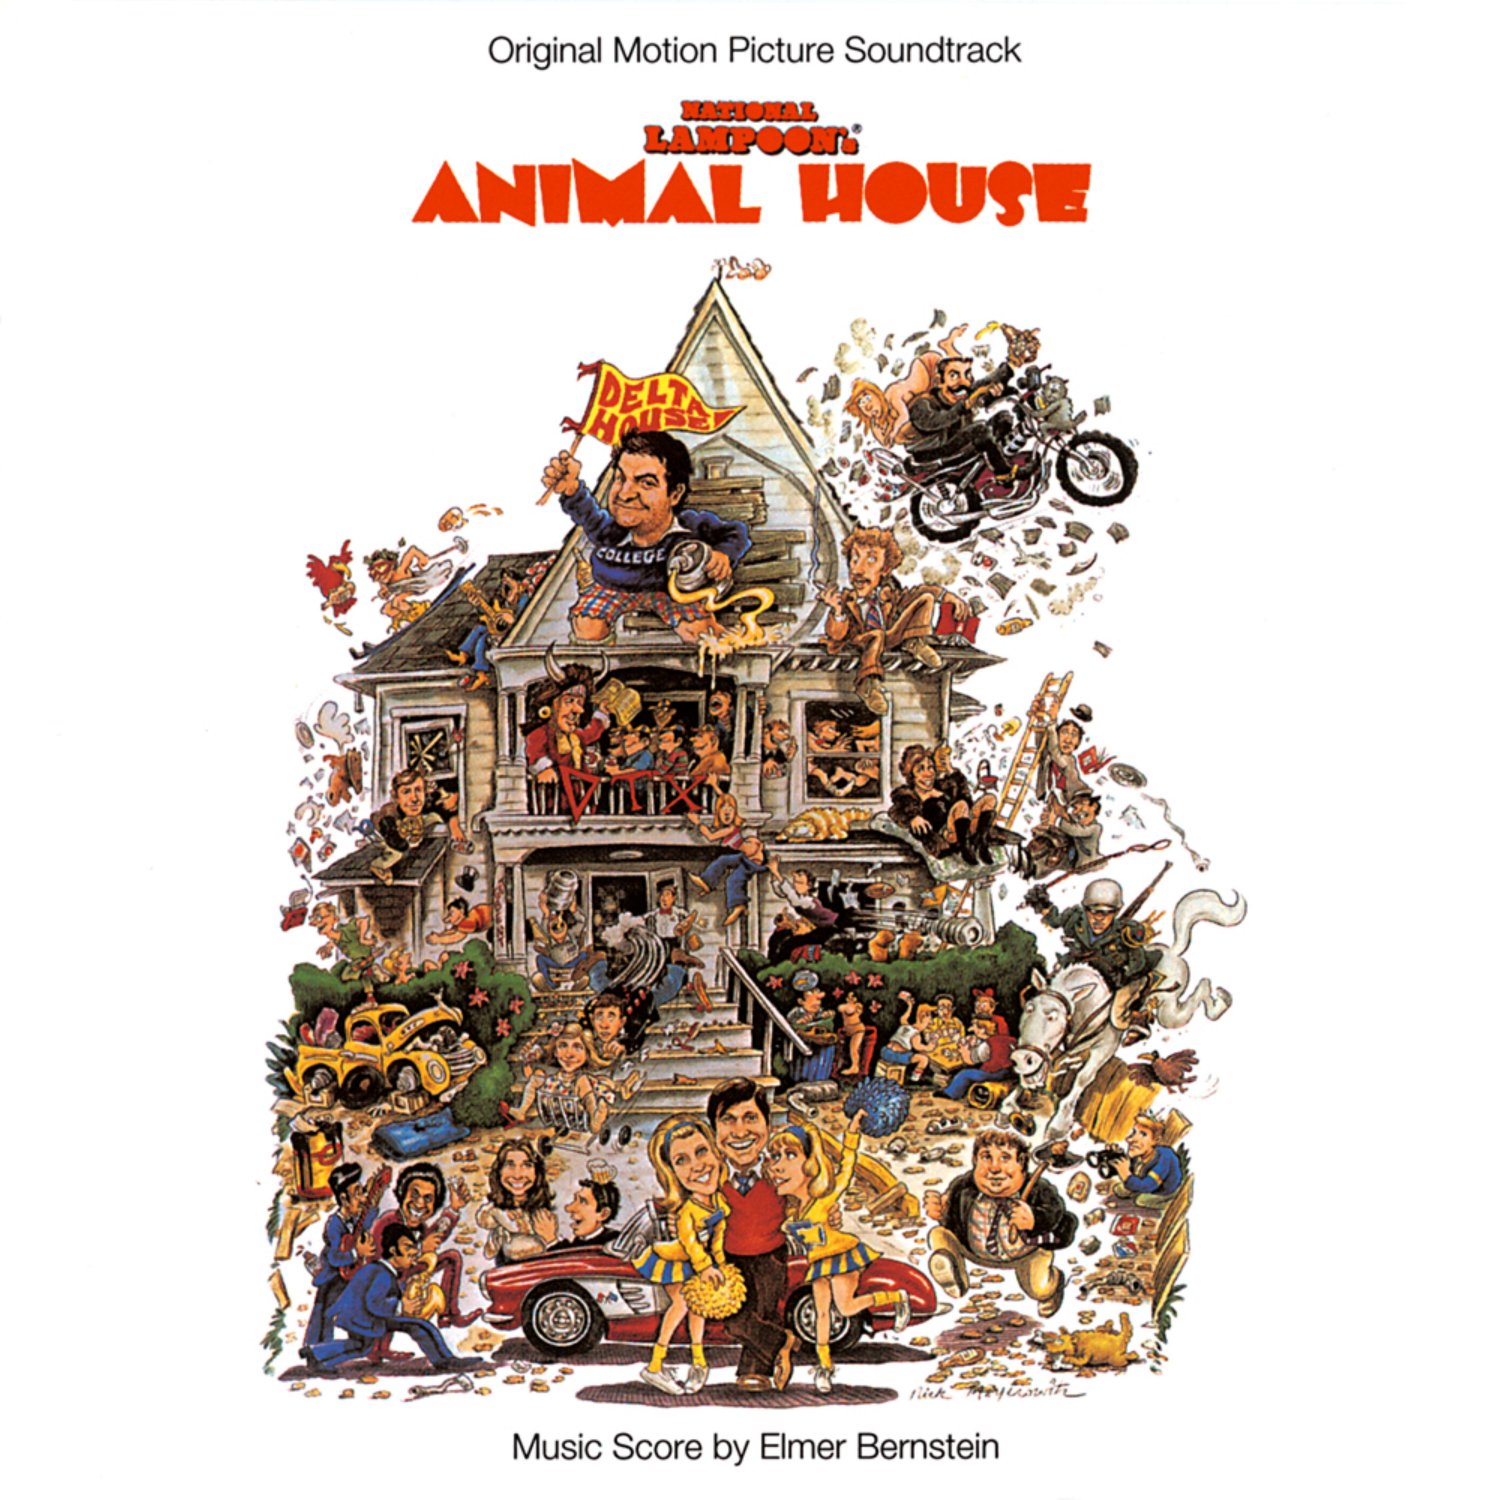 ANIMAL HOUSE Soundtrack BANNER Huge 4X4 Ft Fabric Poster Tapestry Flag Print movie art